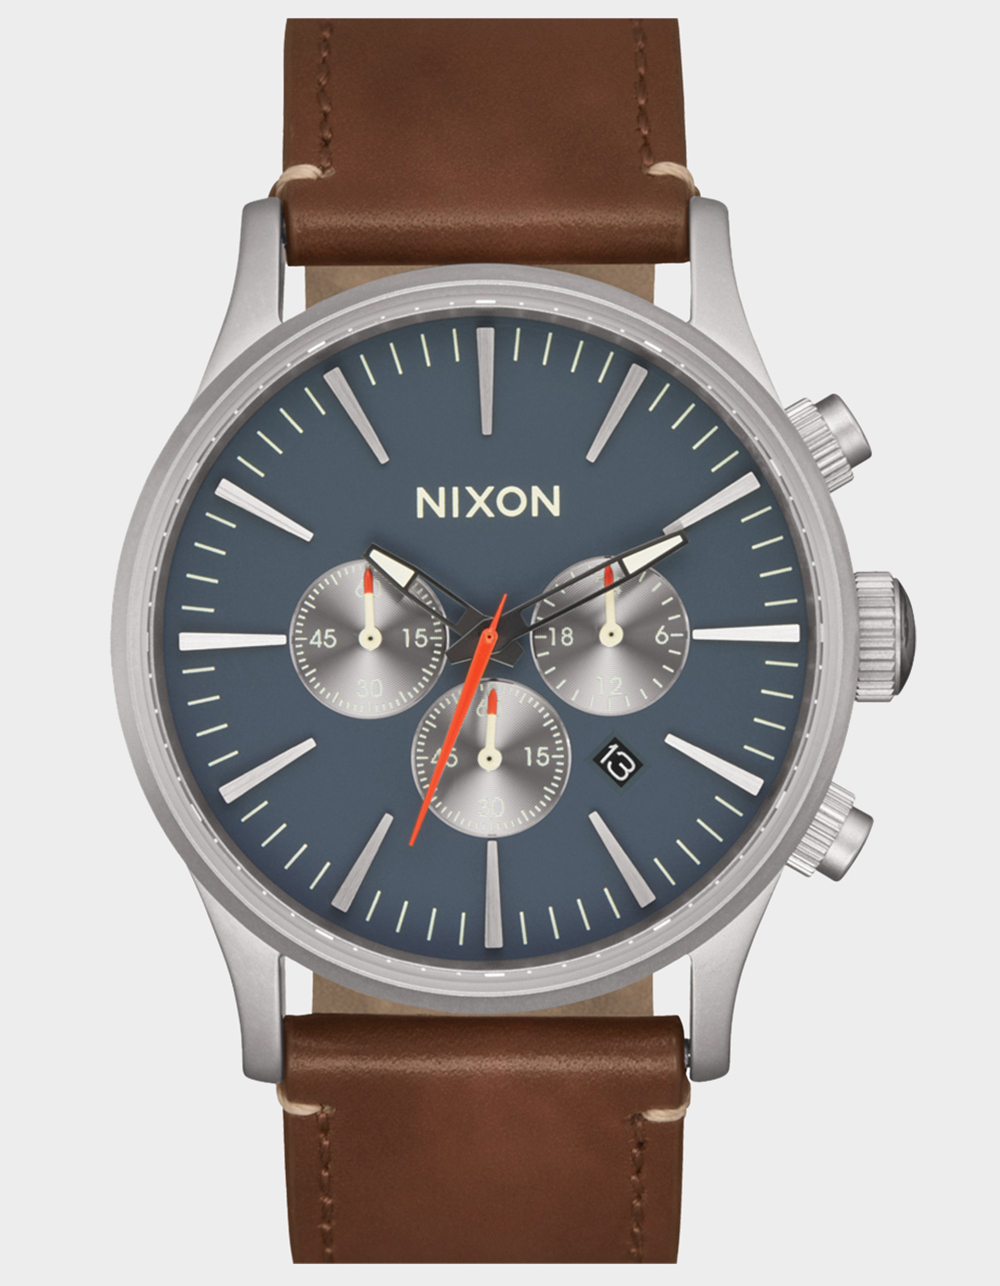 NIXON Sentry Chrono Leather Watch